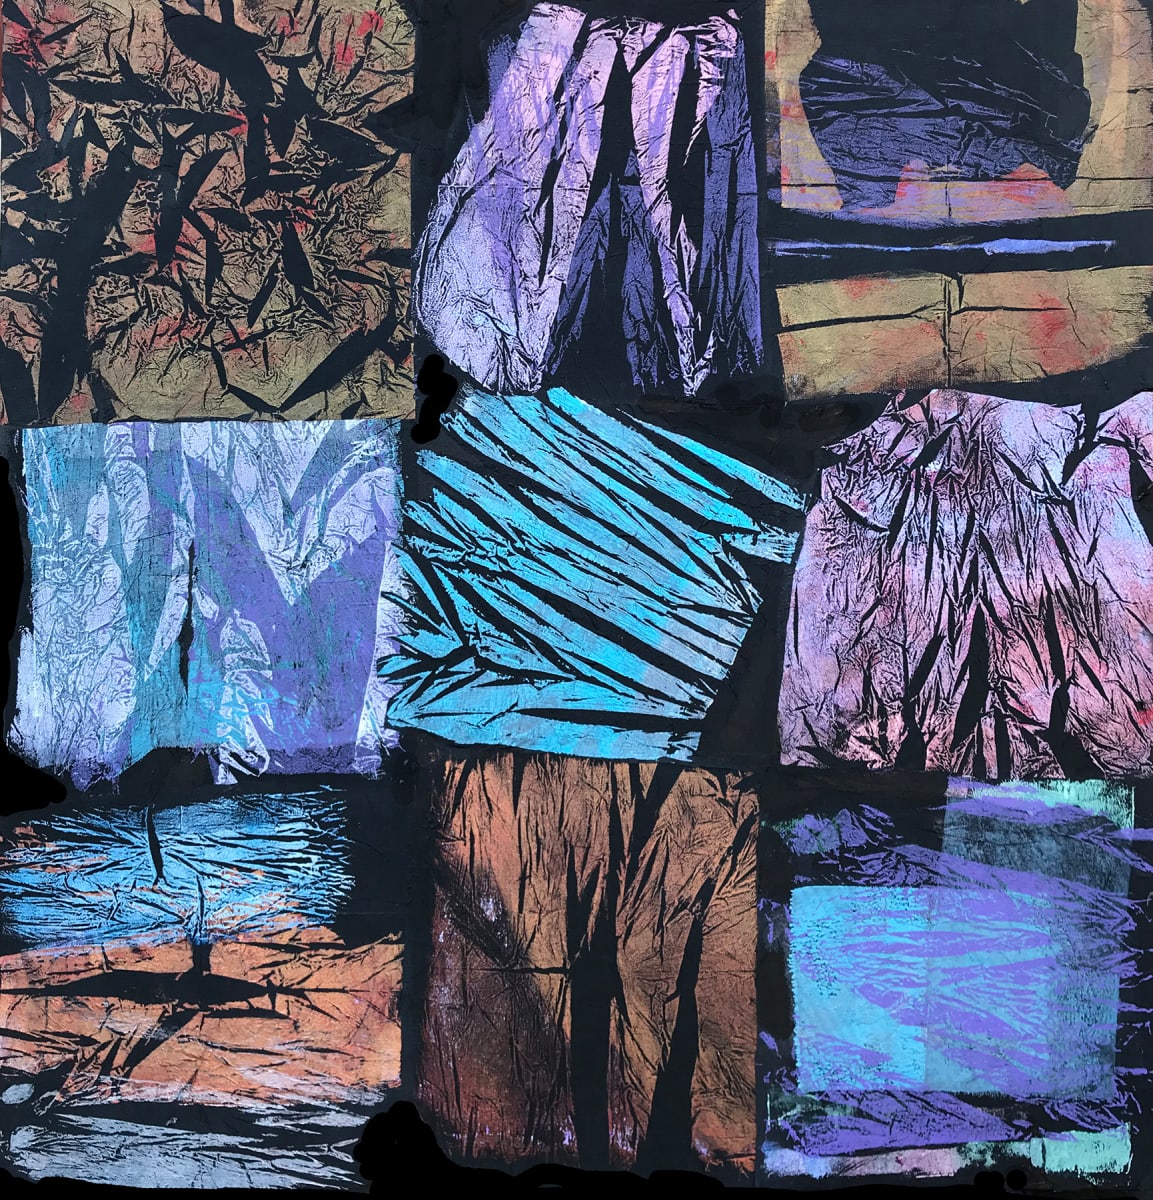 The Great Napkin Caper  Image: Metallic gelatin prints on black napkins mounted on canvas